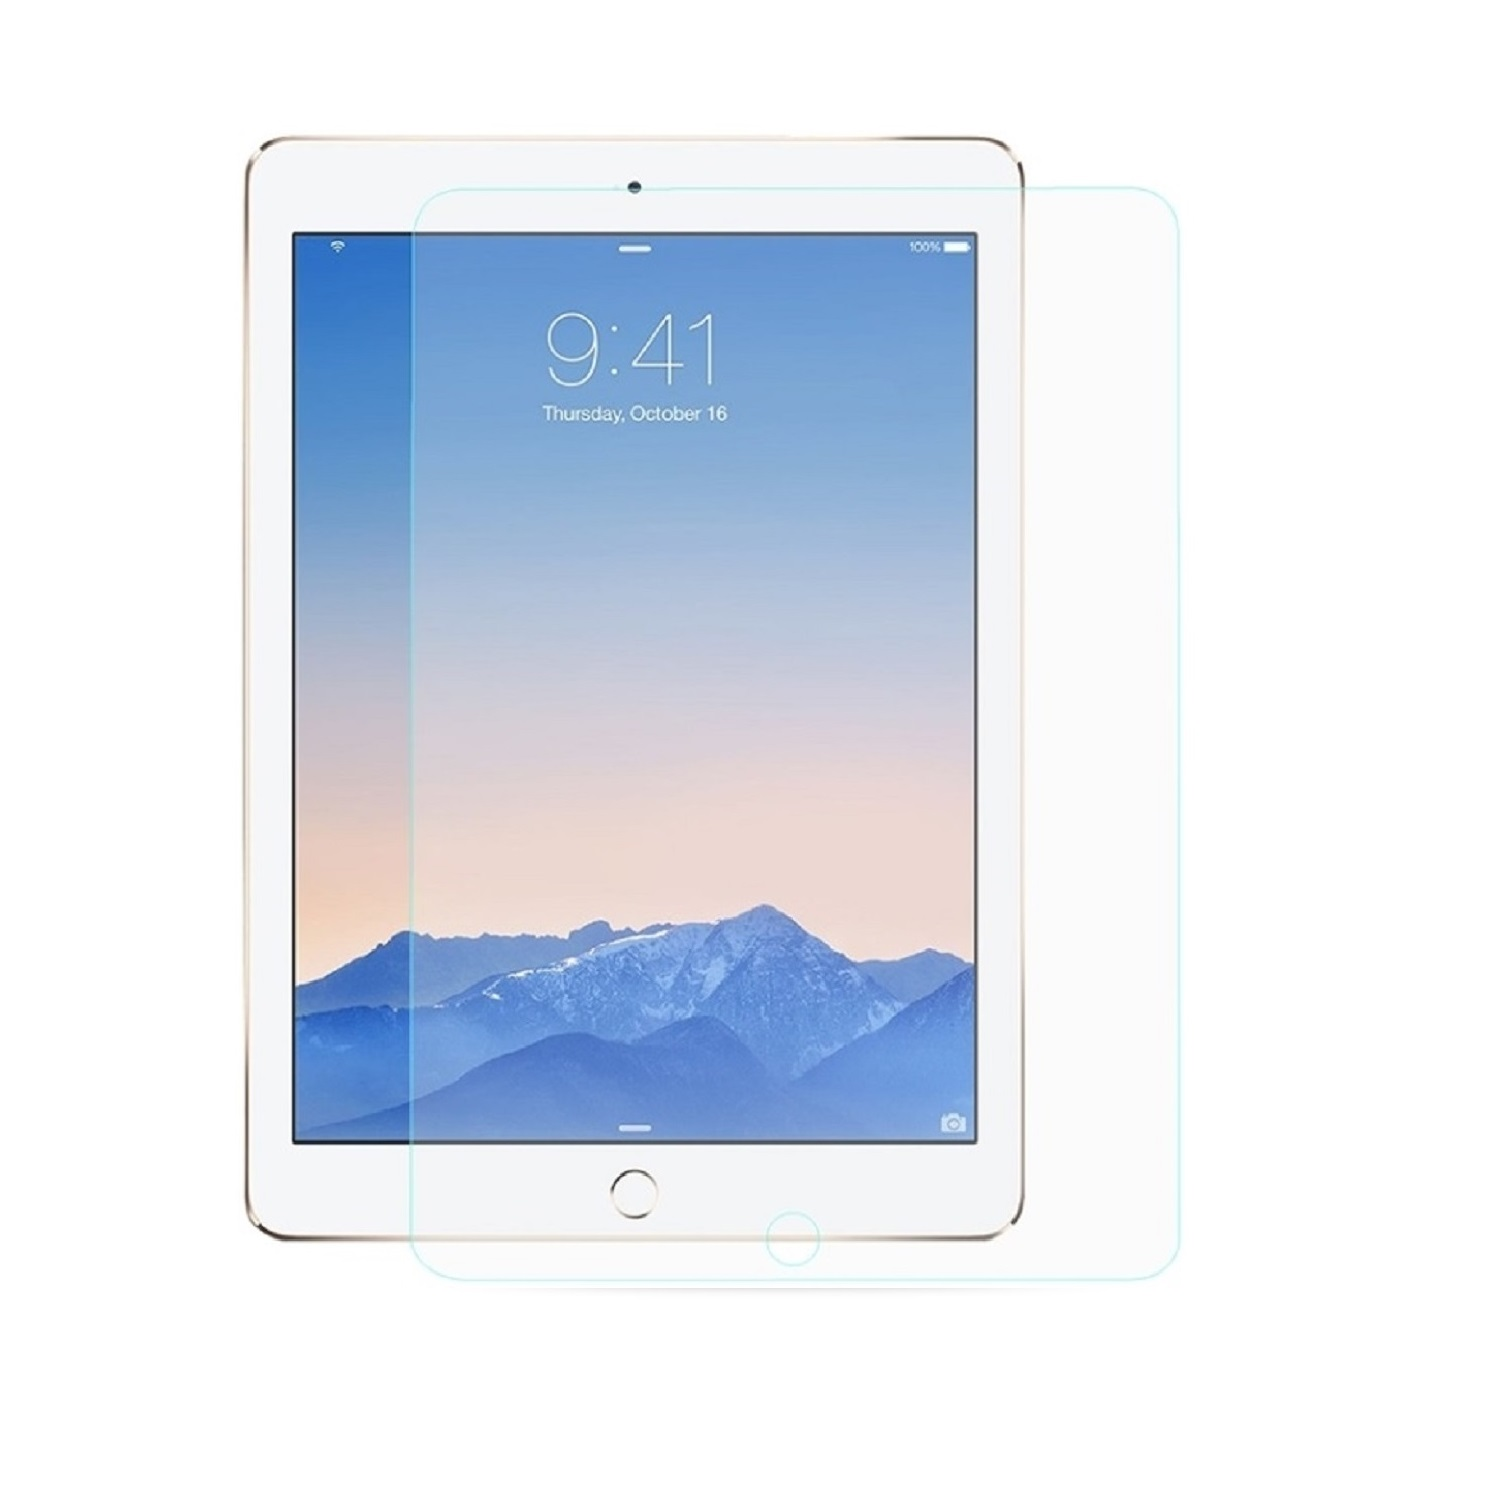 Schutzfolie 2x PROTECTORKING KLAR Air 9.7) 2 iPad HD Displayschutzfolie(für Apple